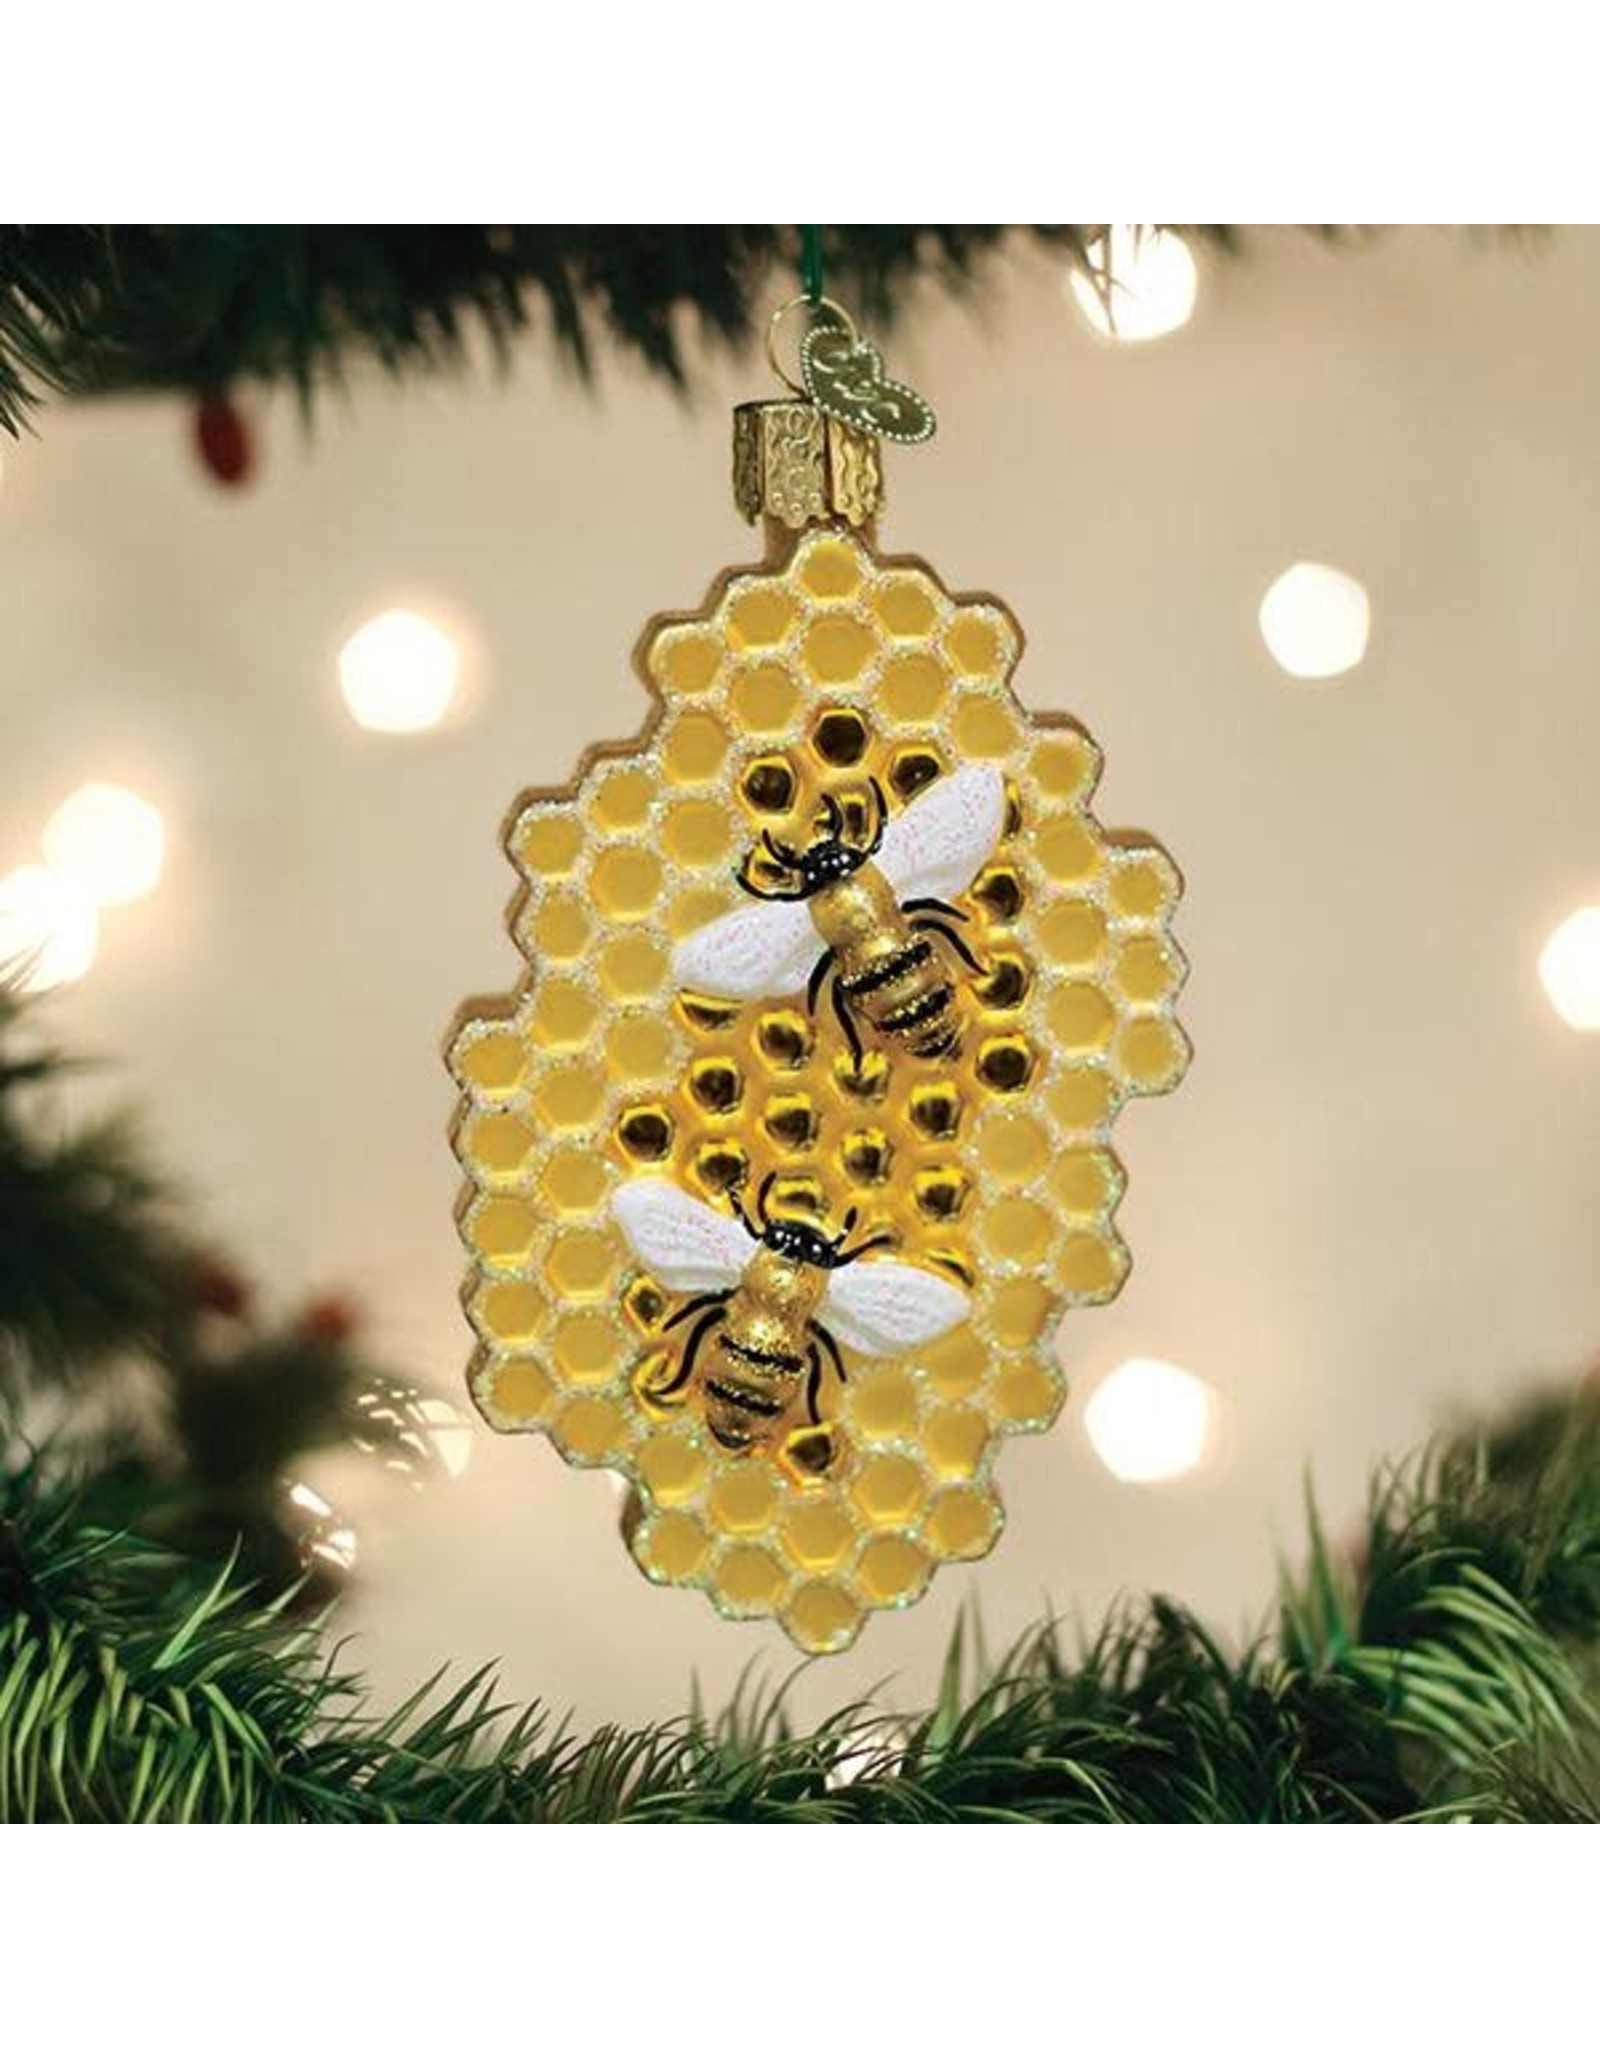 Old World Christmas Honeycomb Ornament